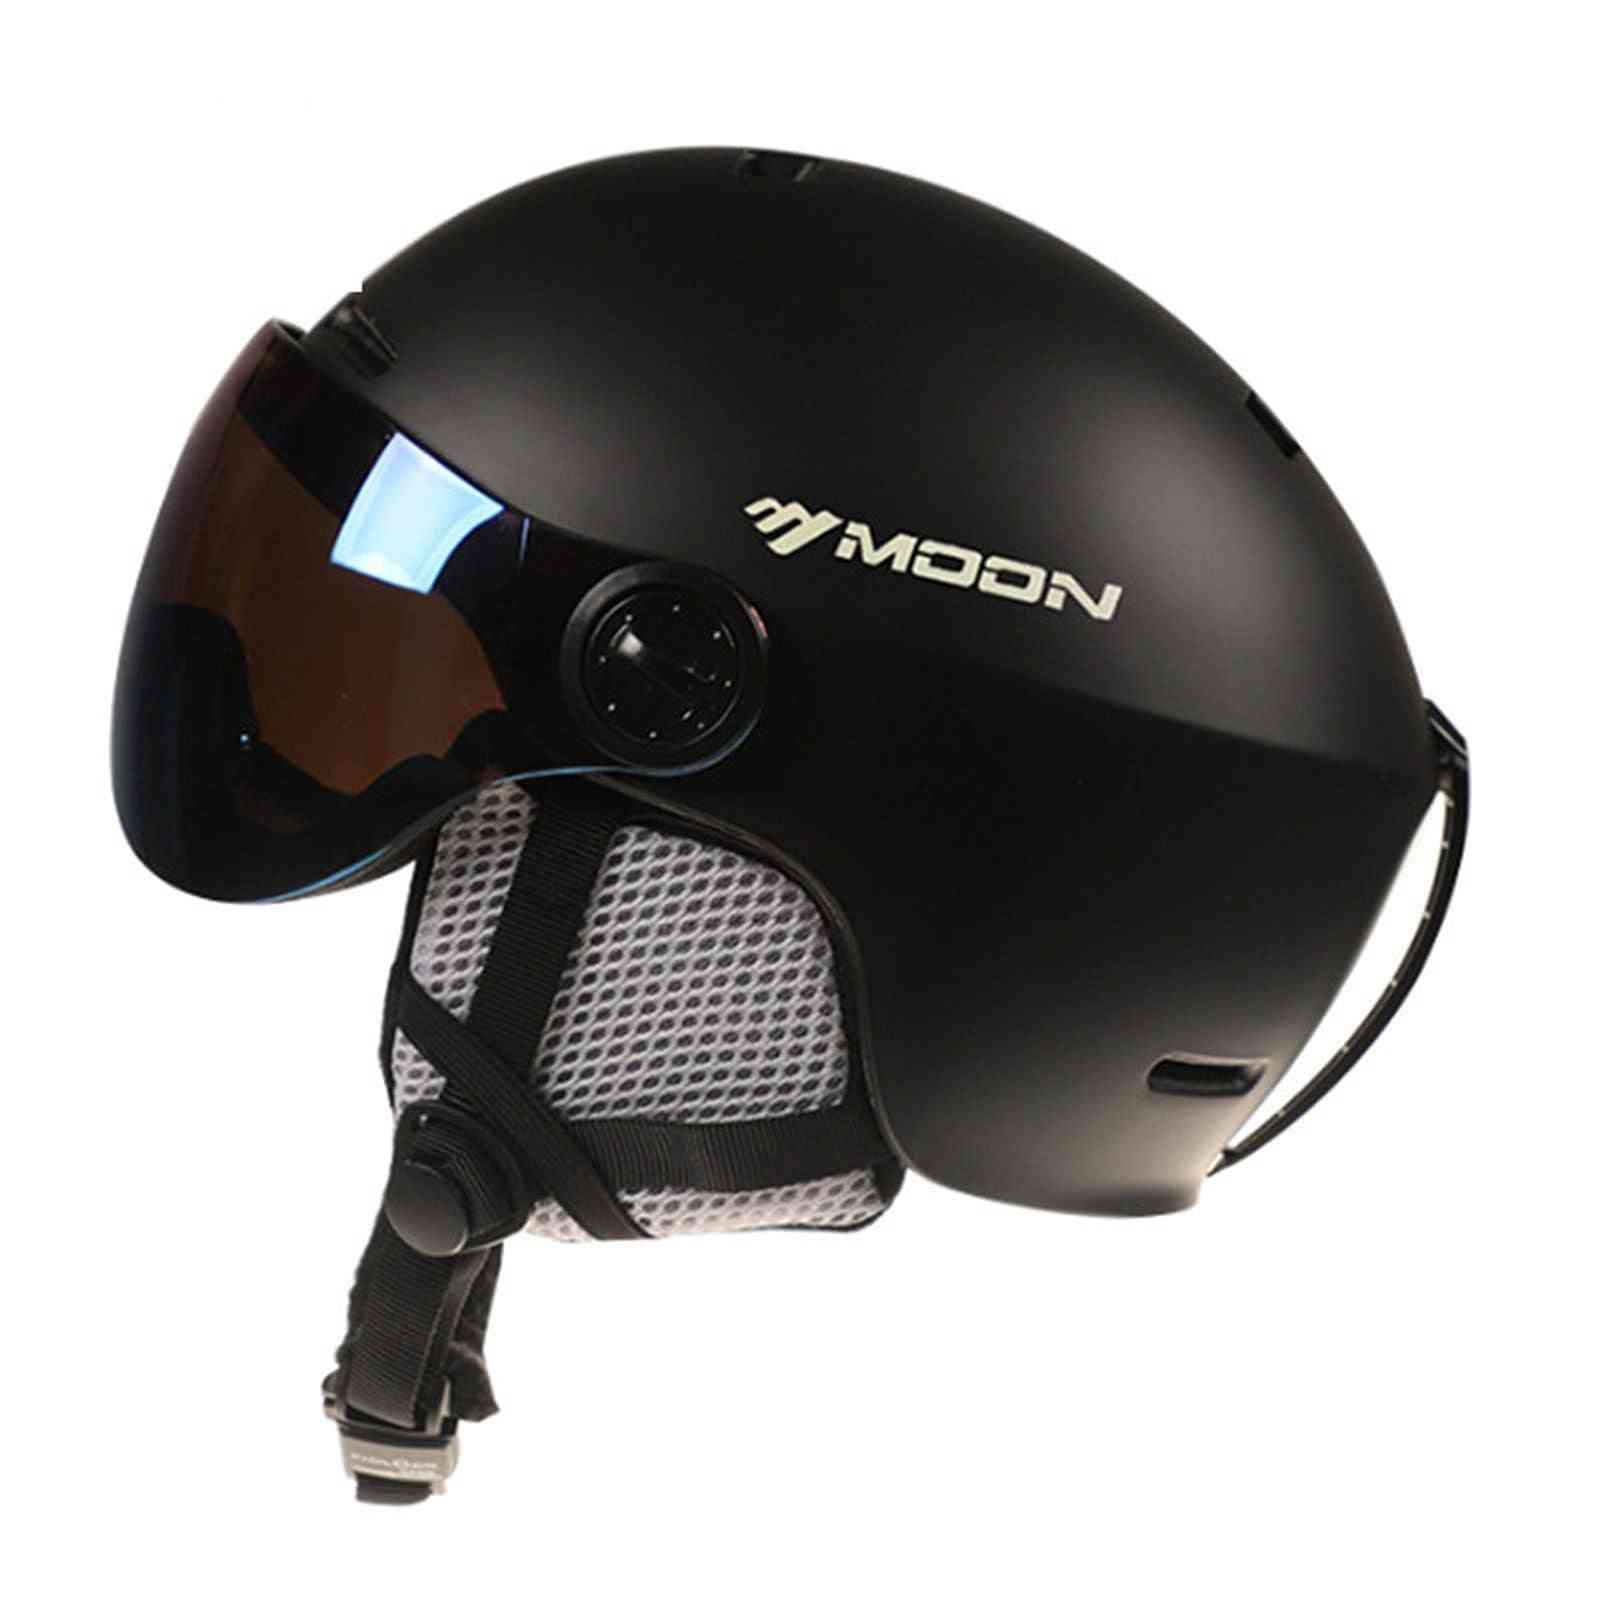 Winter Warm Snowboard Skiing Safety Sled Helmet